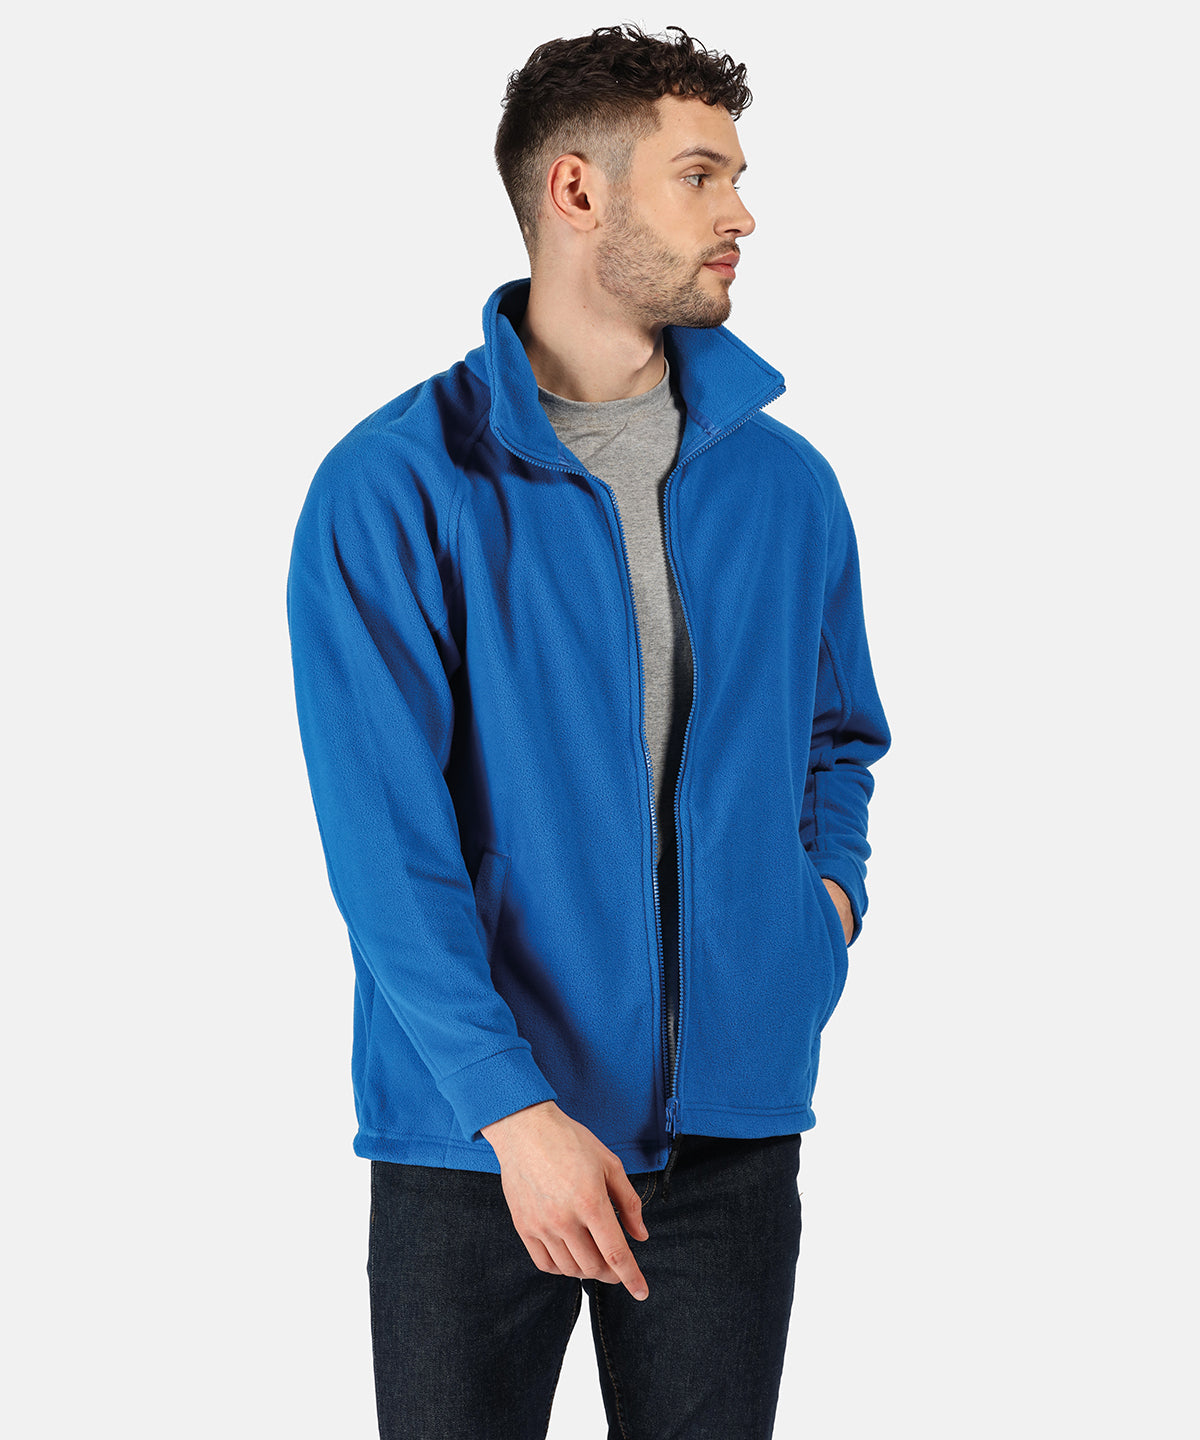 Full zip Soft Fleece - Personalised Jackets & Fleeces, Workwear